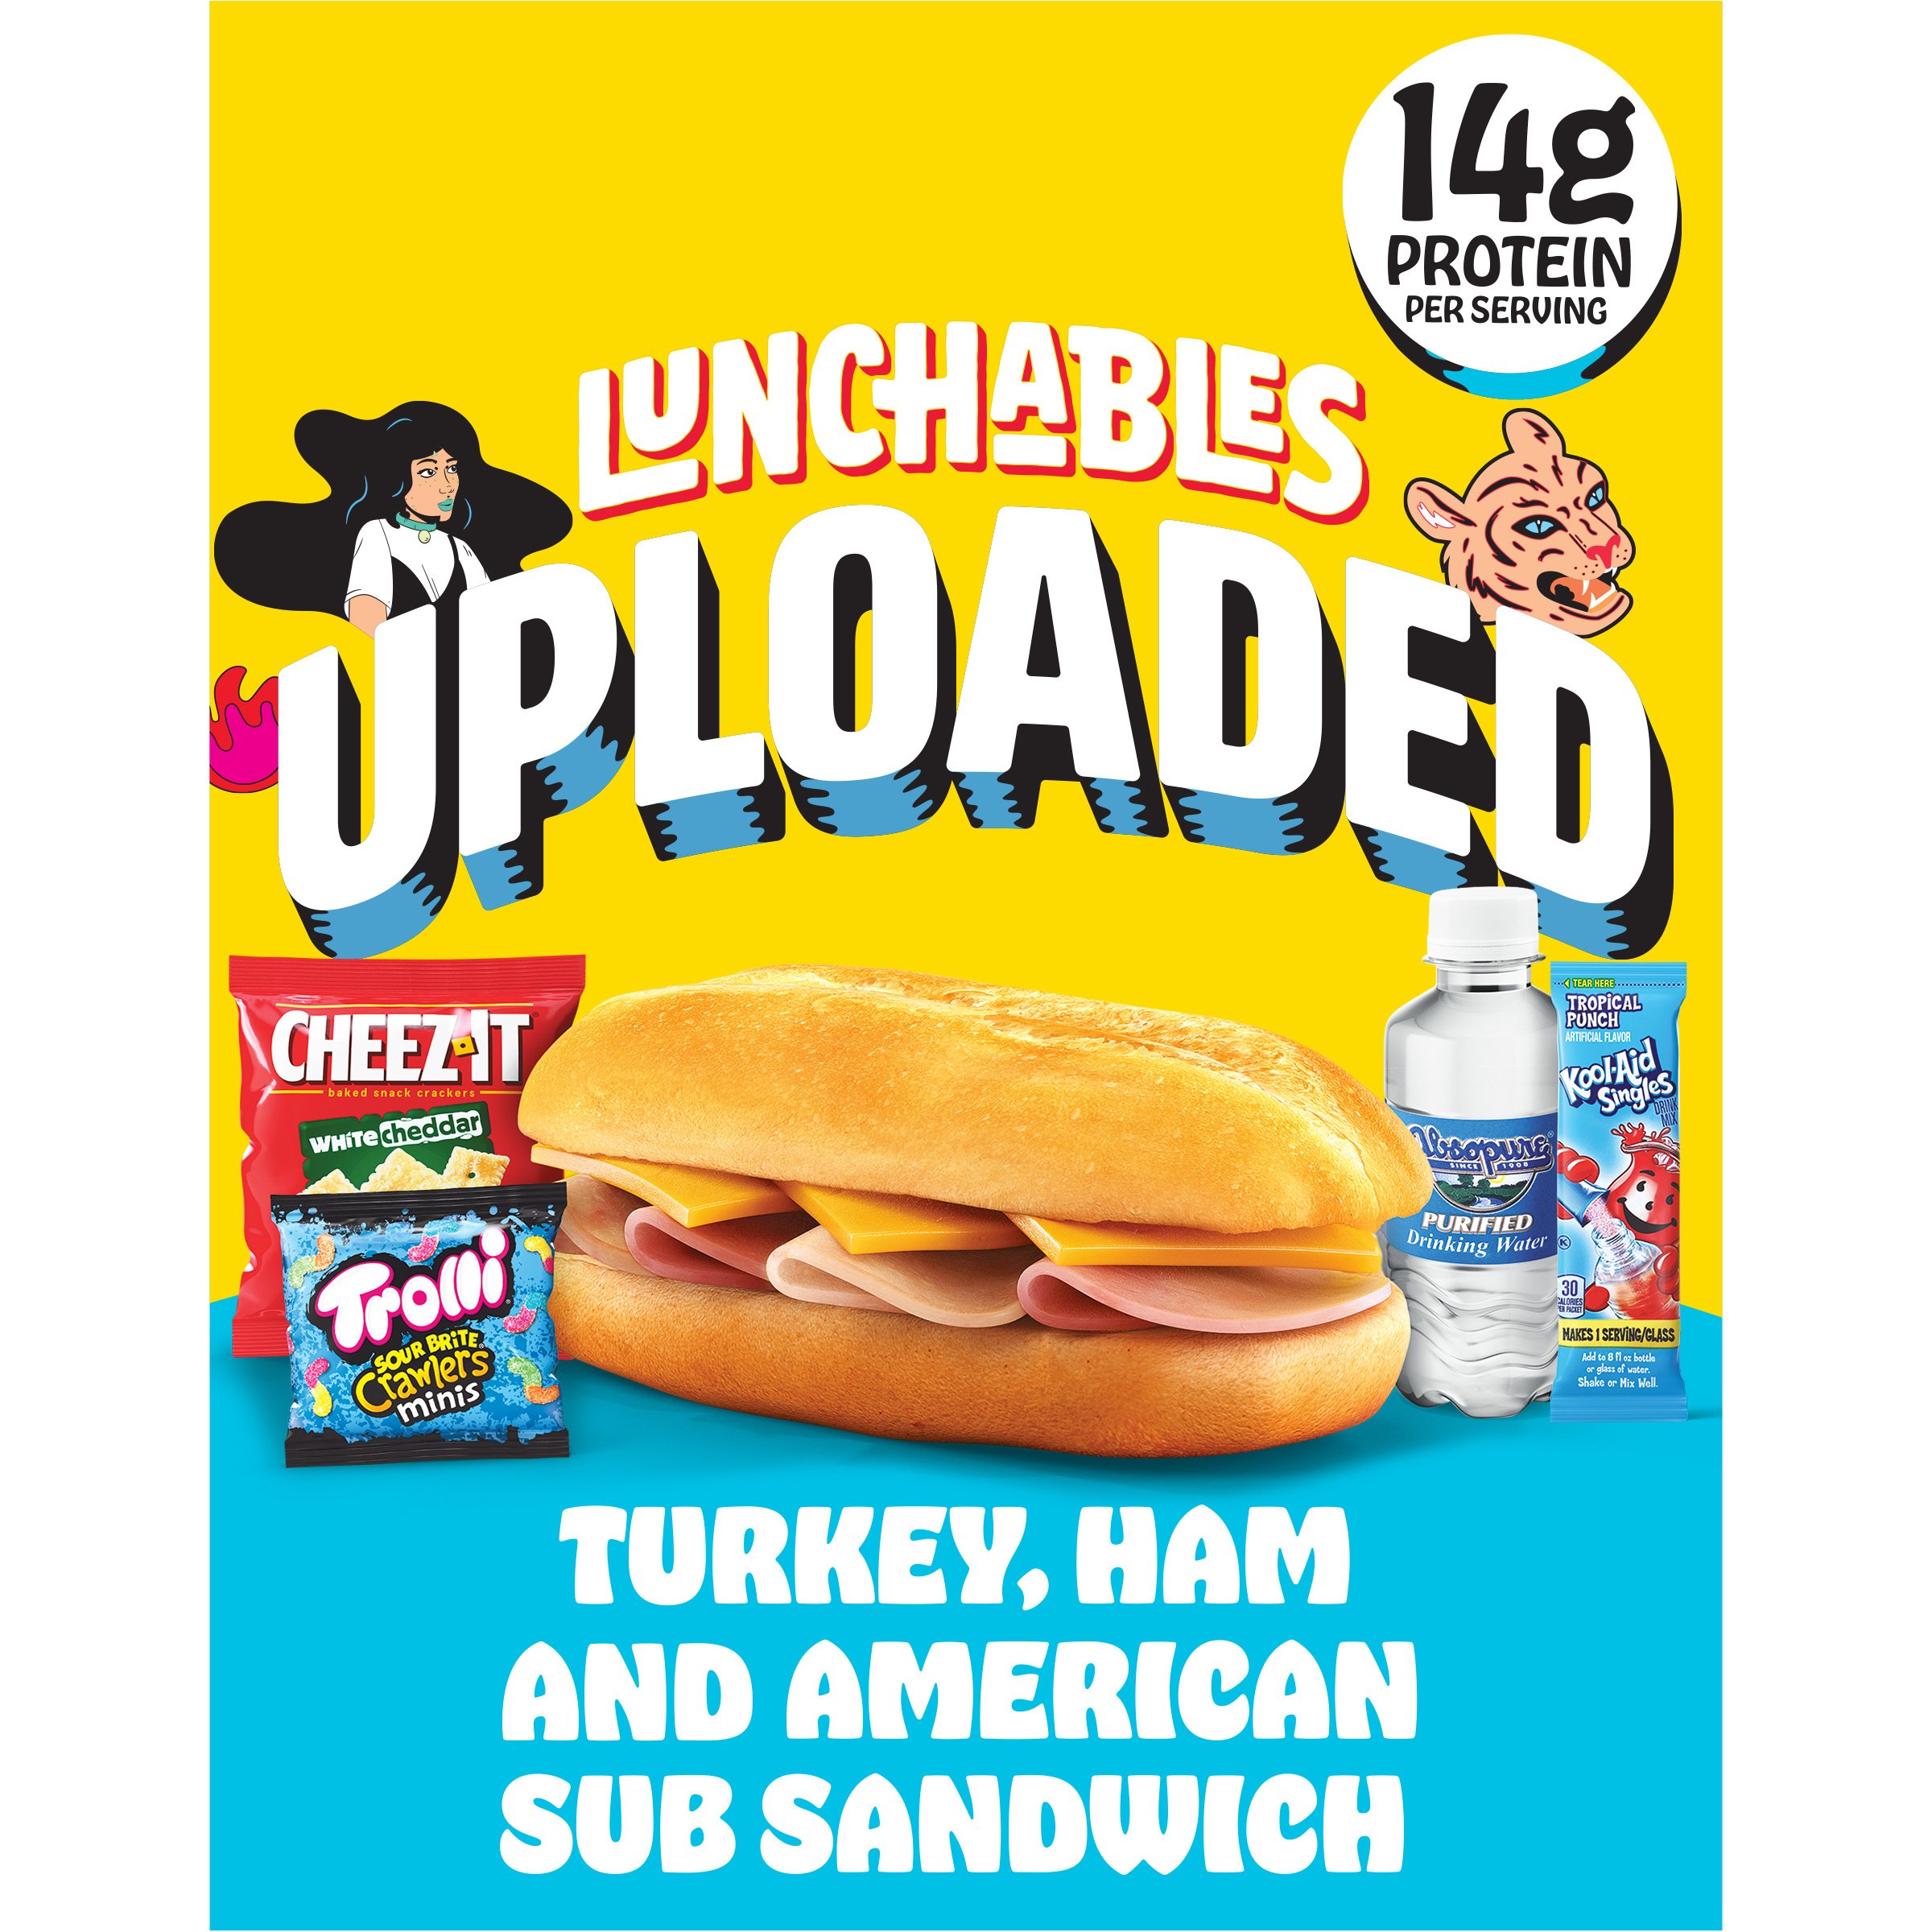 Oscar Mayer Lunchables Uploaded 6 Inch Turkey And Ham Sub Sandwich Shop Snack Trays At H E B